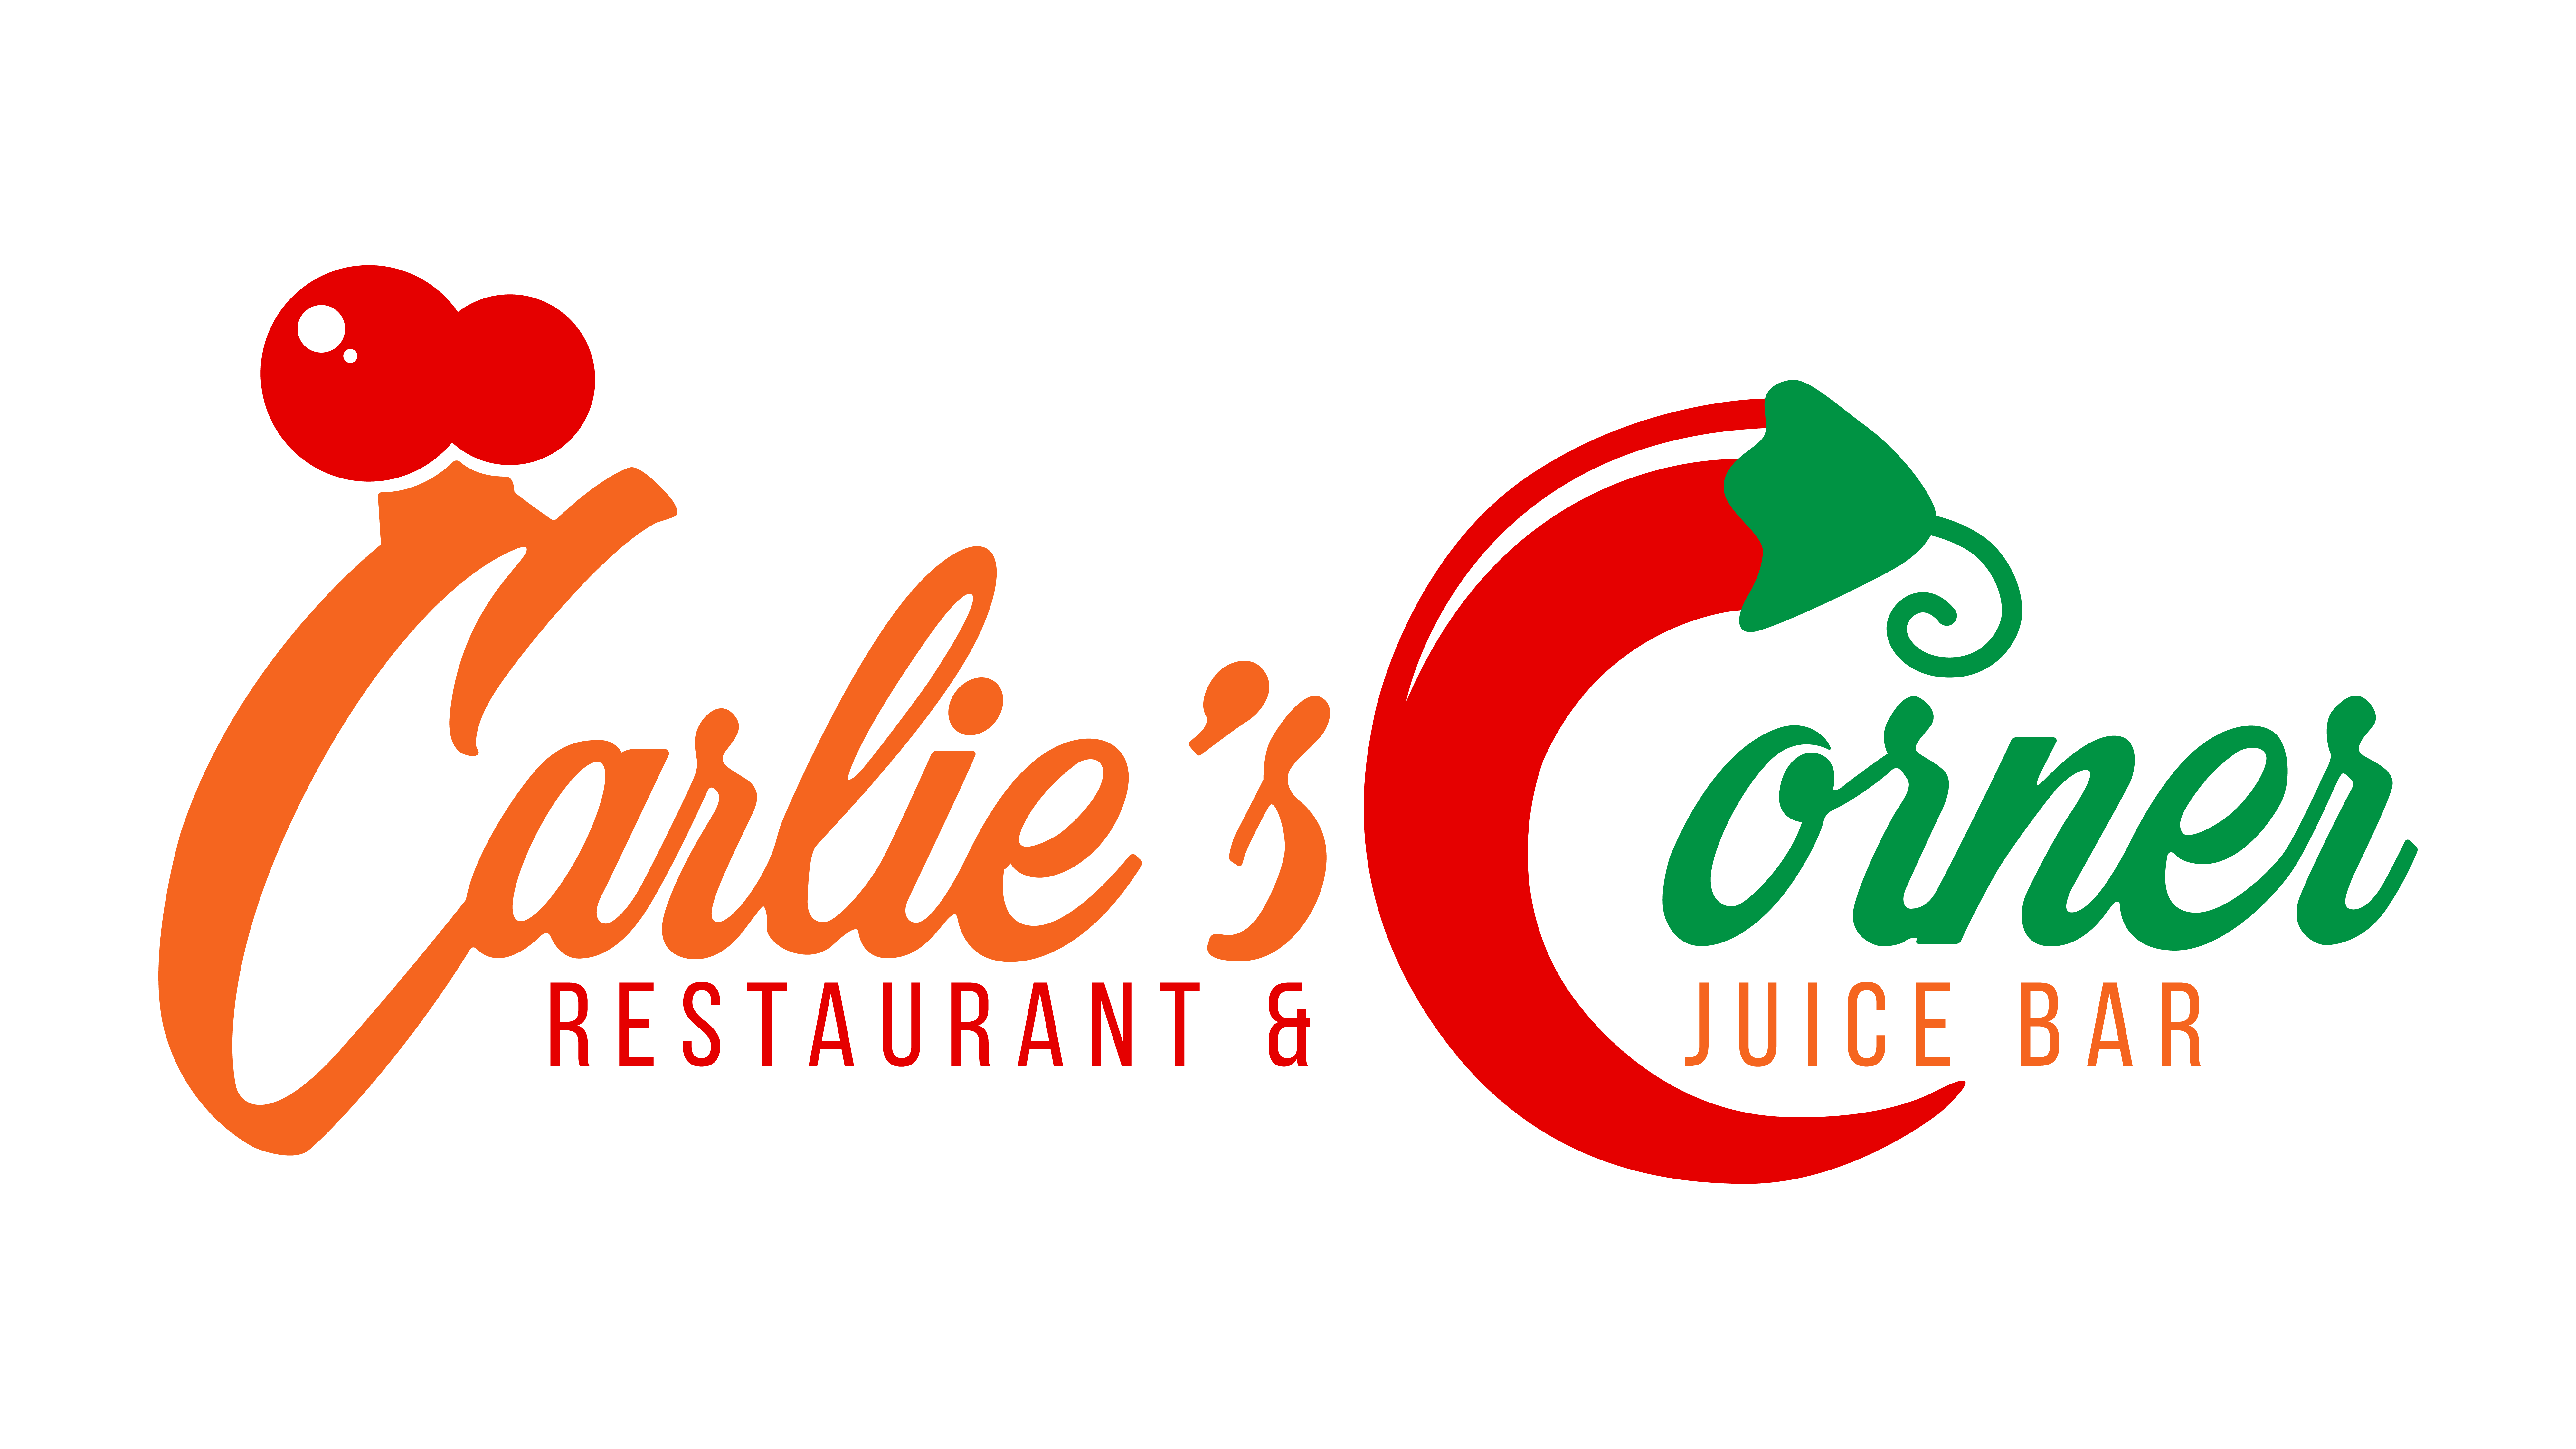 Carlie's Corner Restaurant & Juice Bar